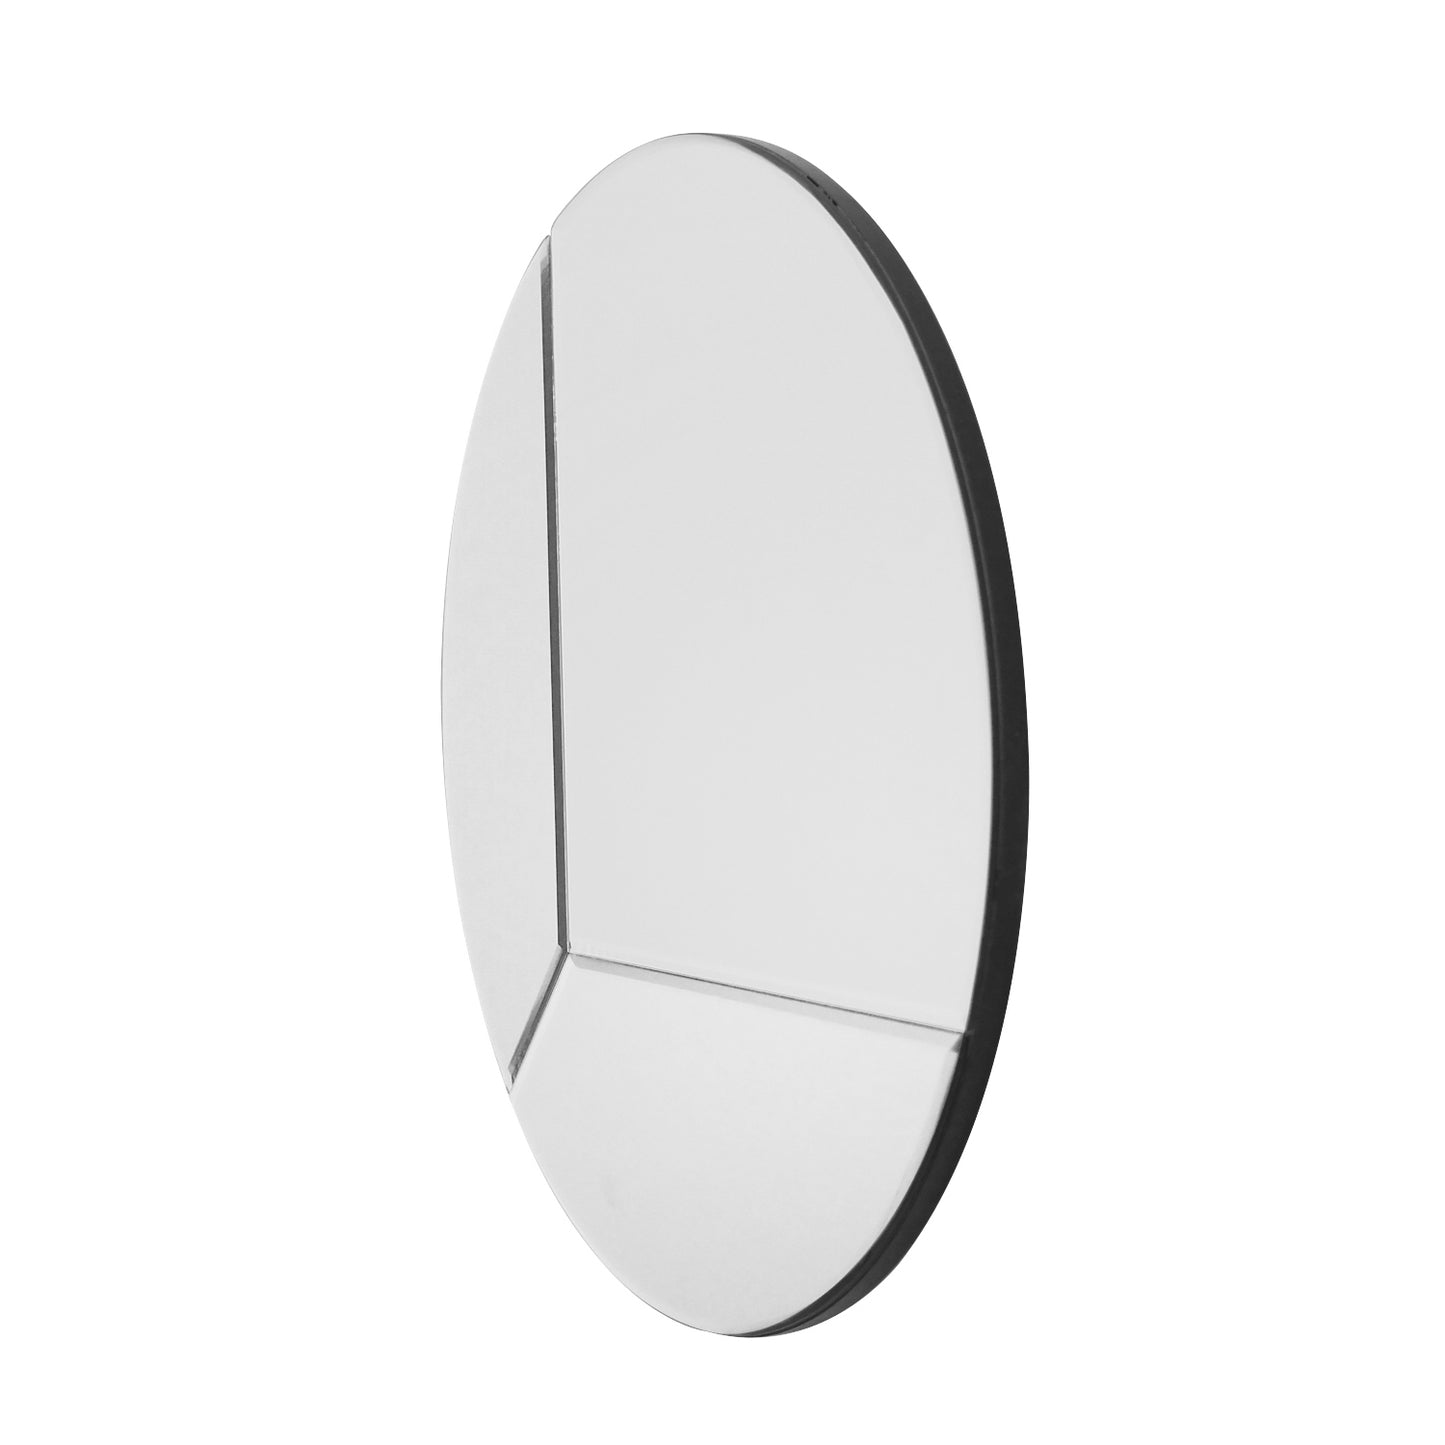 Reversible Round XL - Mirror - 55 cm (22 inches) - Beveled Mirror - Reflective Artwork